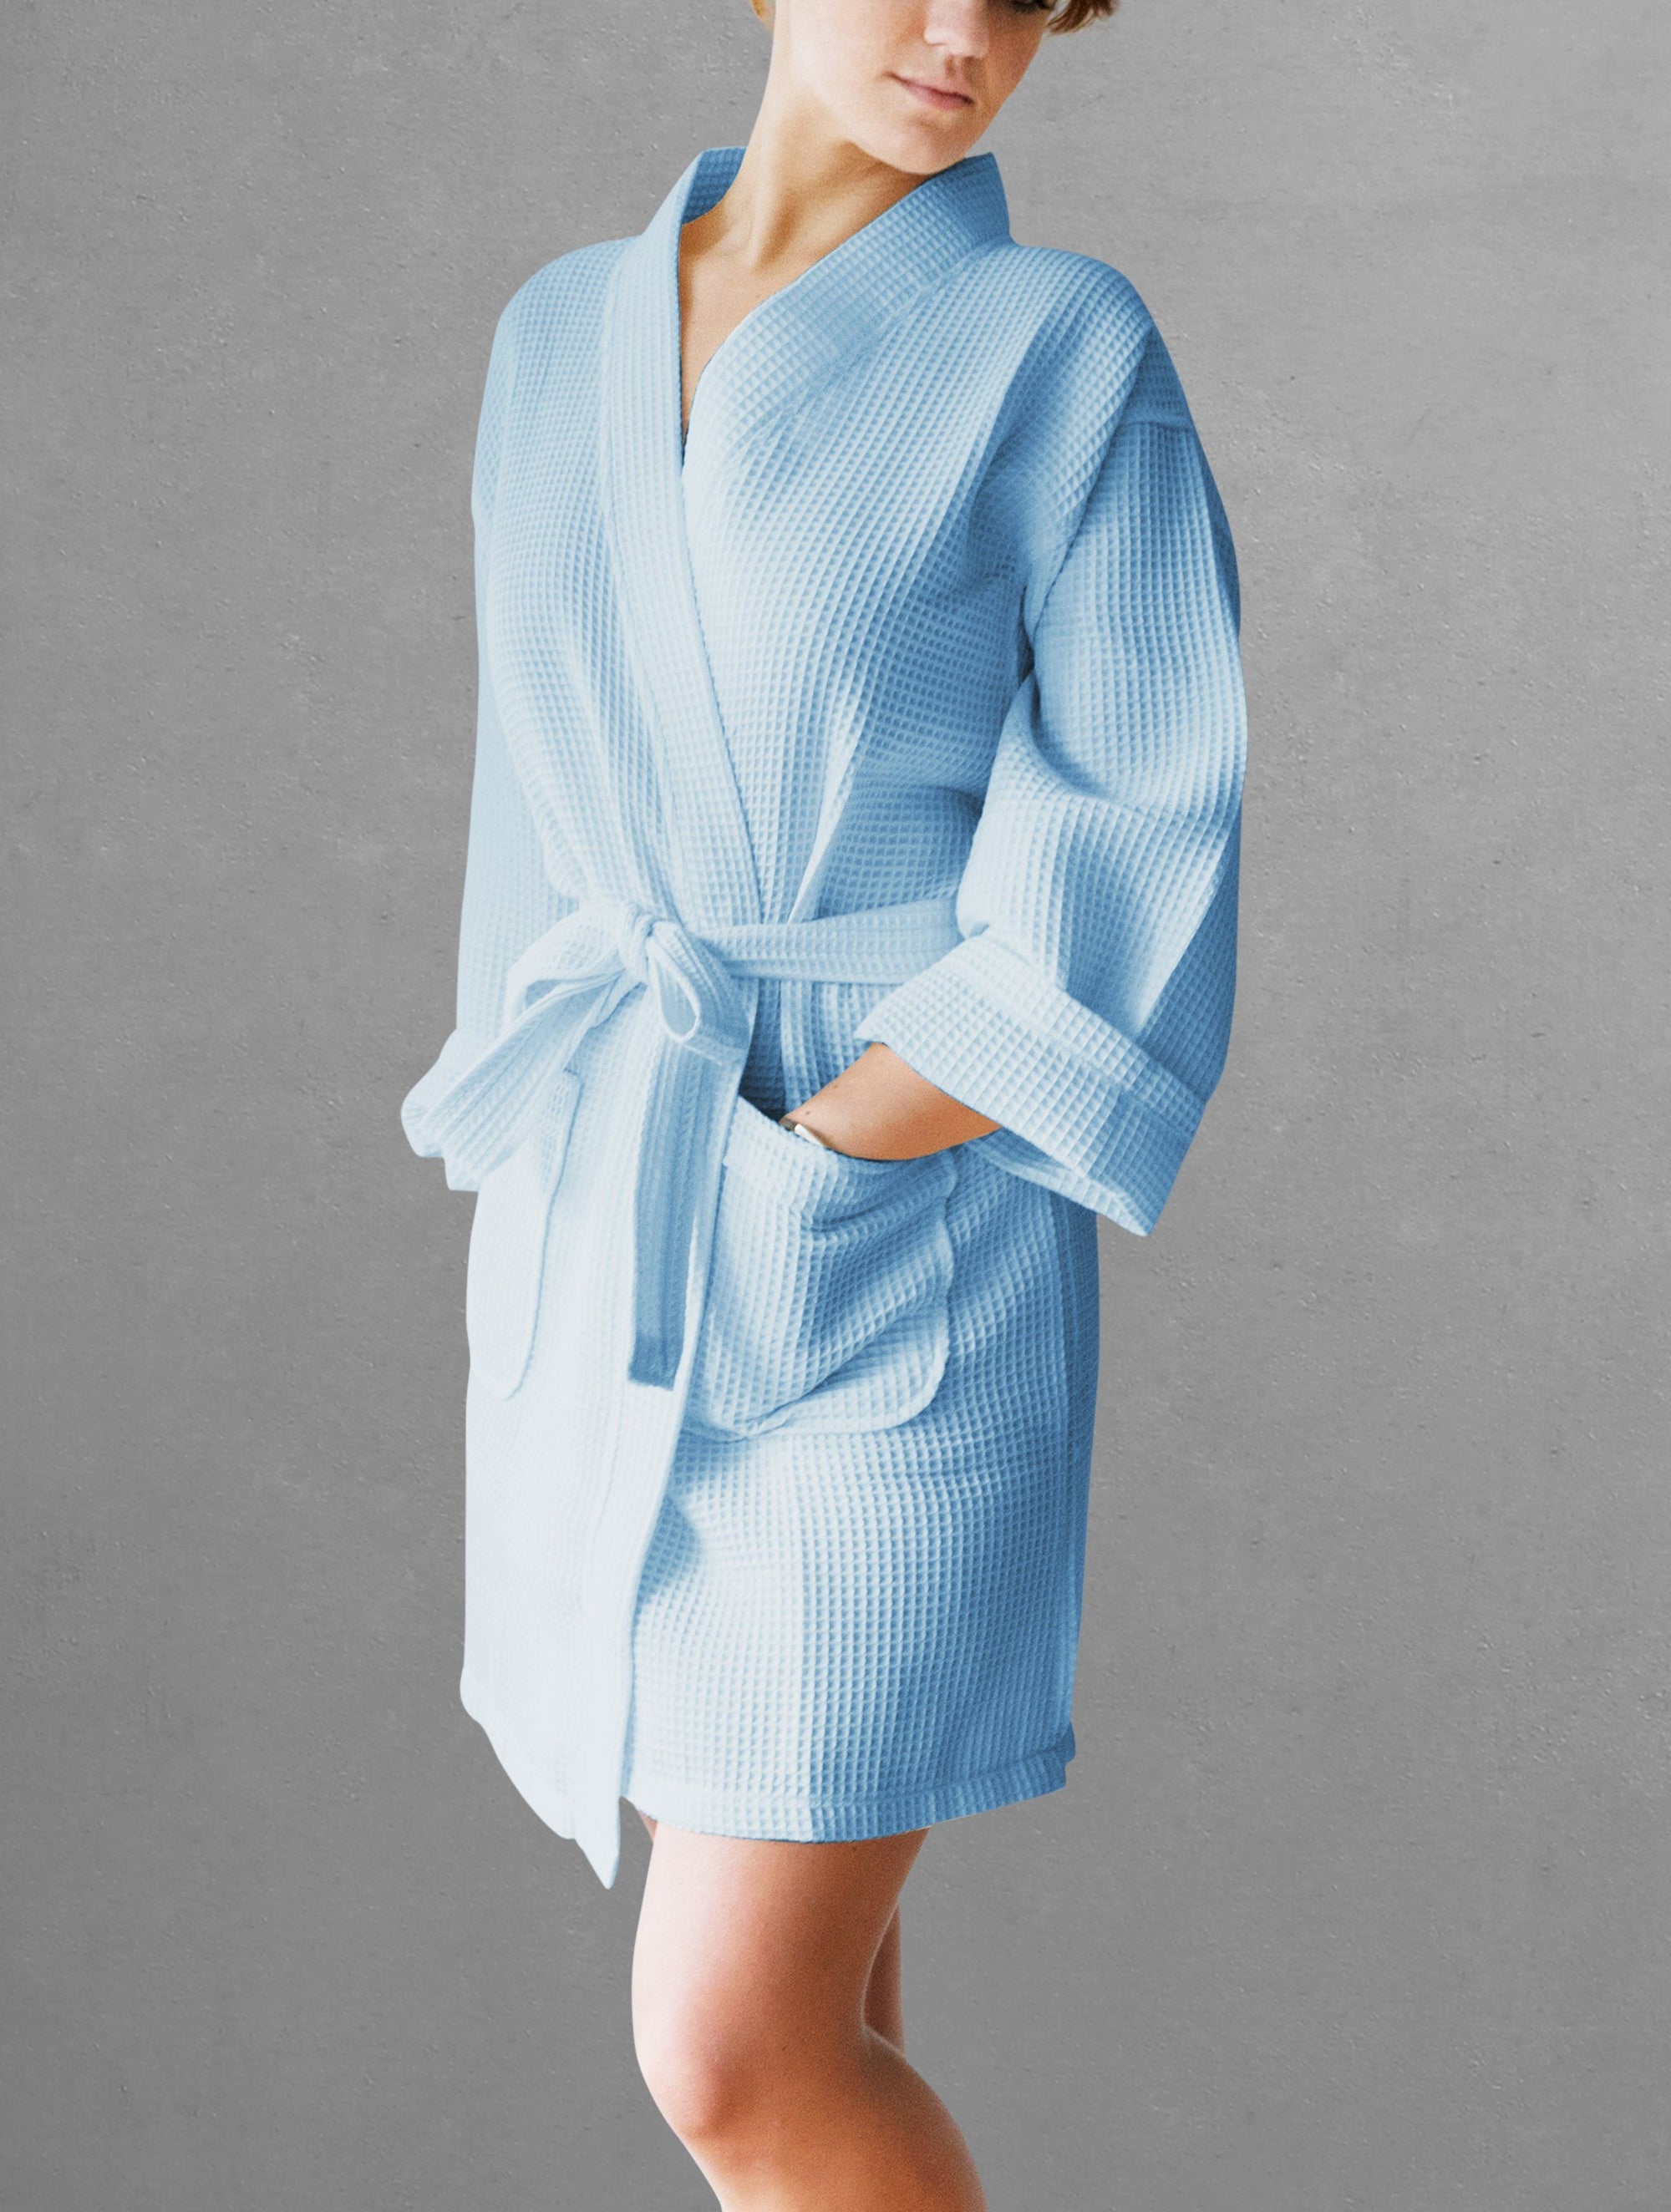 Buy Solid Sky Blue Cotton Bathrobe for Women Online at Secret Wish | 23597